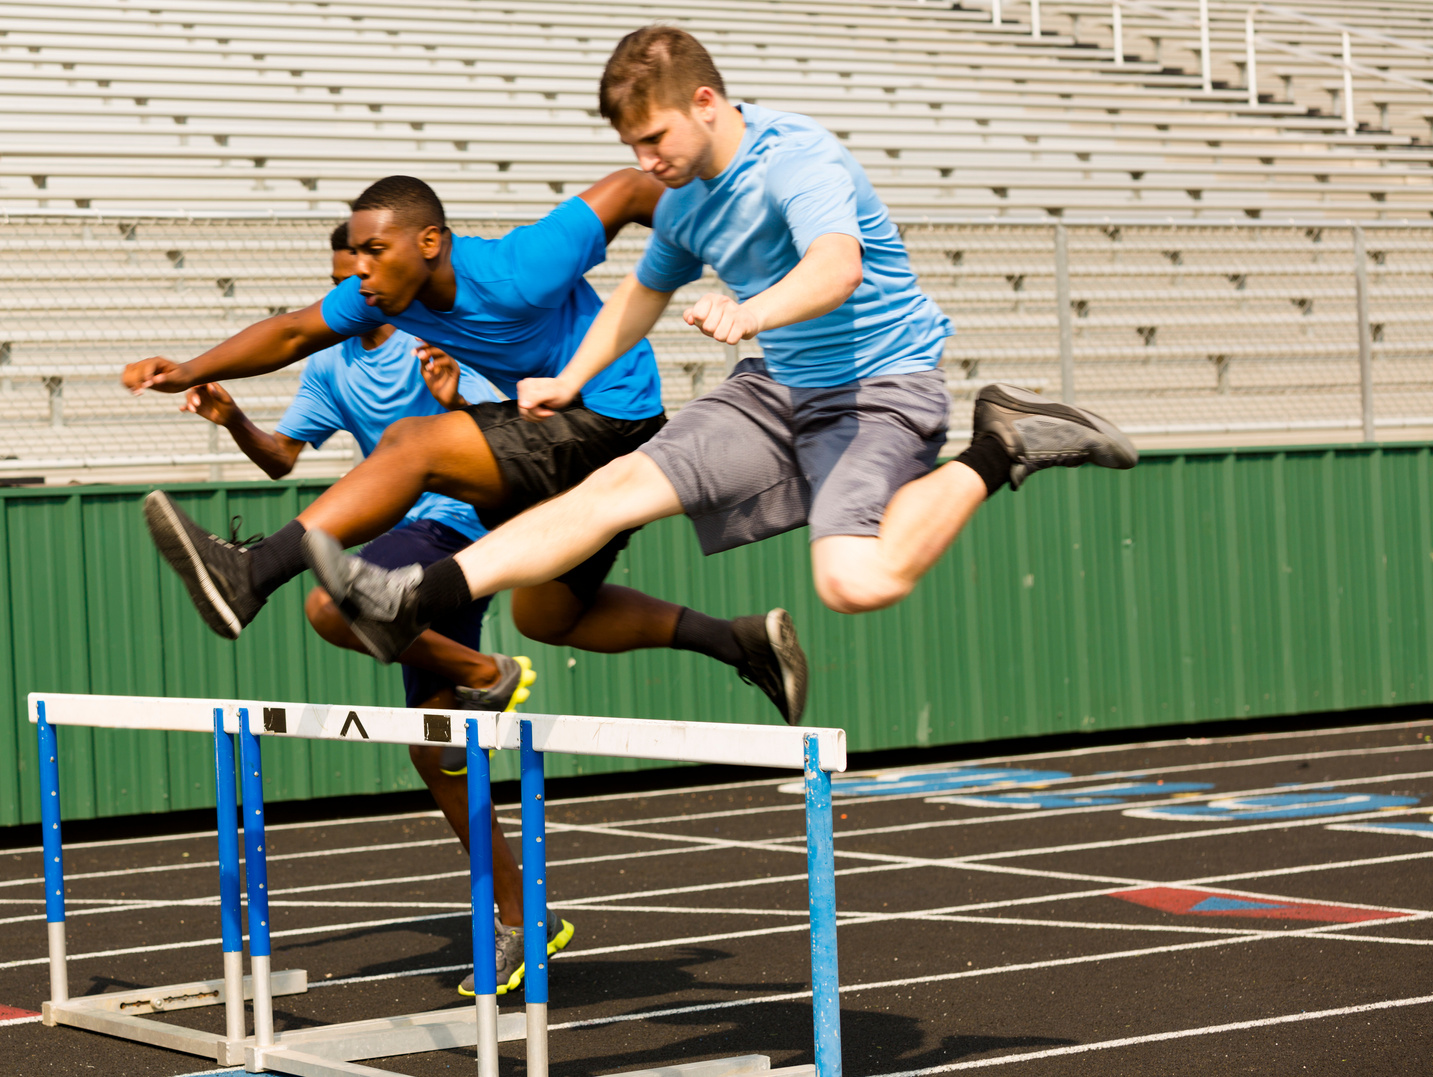 Sports: Three high school boys run a hurdles race.